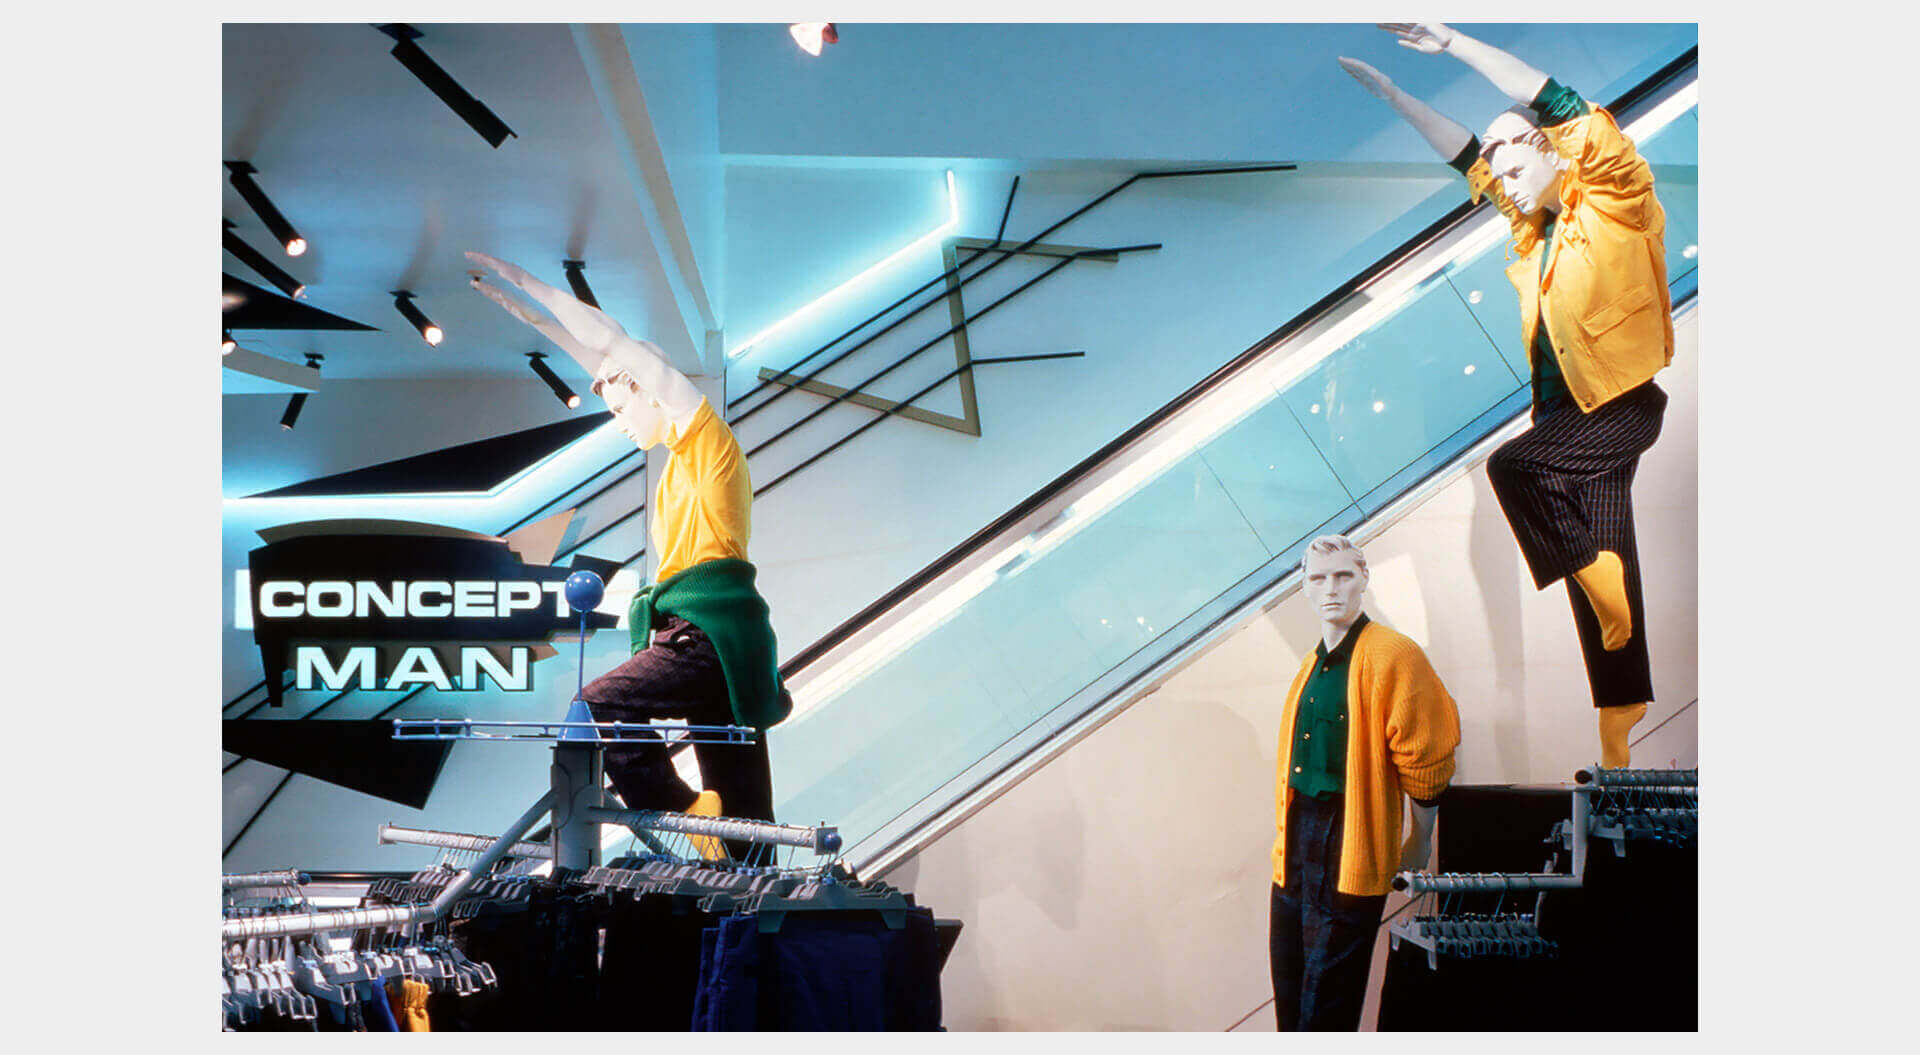 Concept Man fashion store brand interior  internal brand signage for shop escalators design merchandising systems